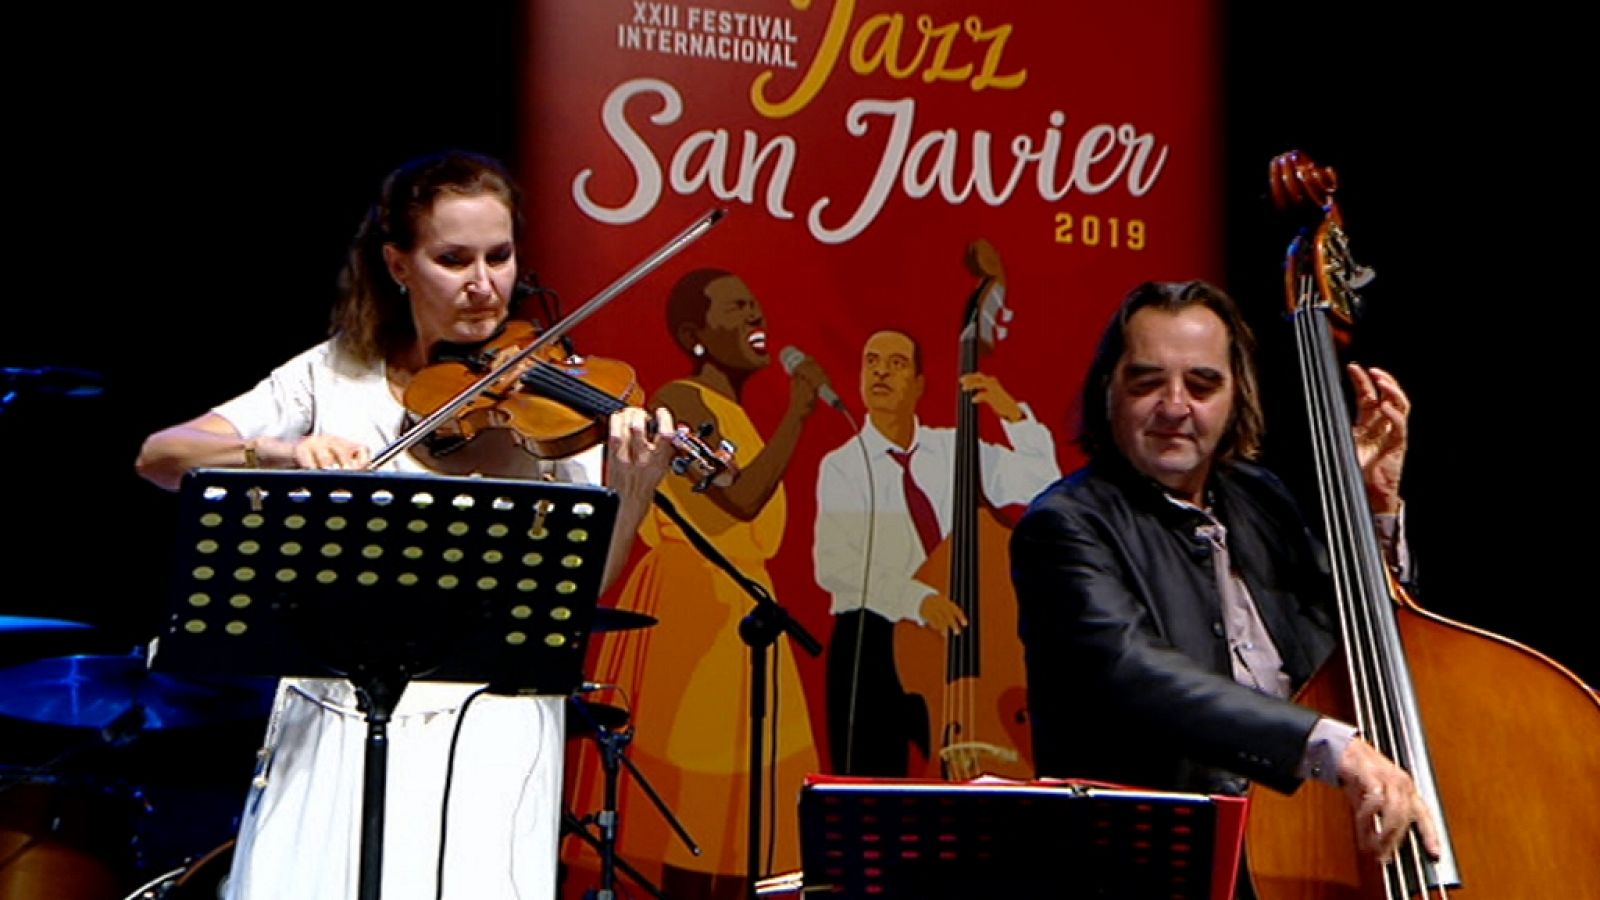 Festivales de verano - 22º Festival de Jazz San Javier: Homenaje a Michel Legrand: Natalie Dessay & Boussaquet Quartet